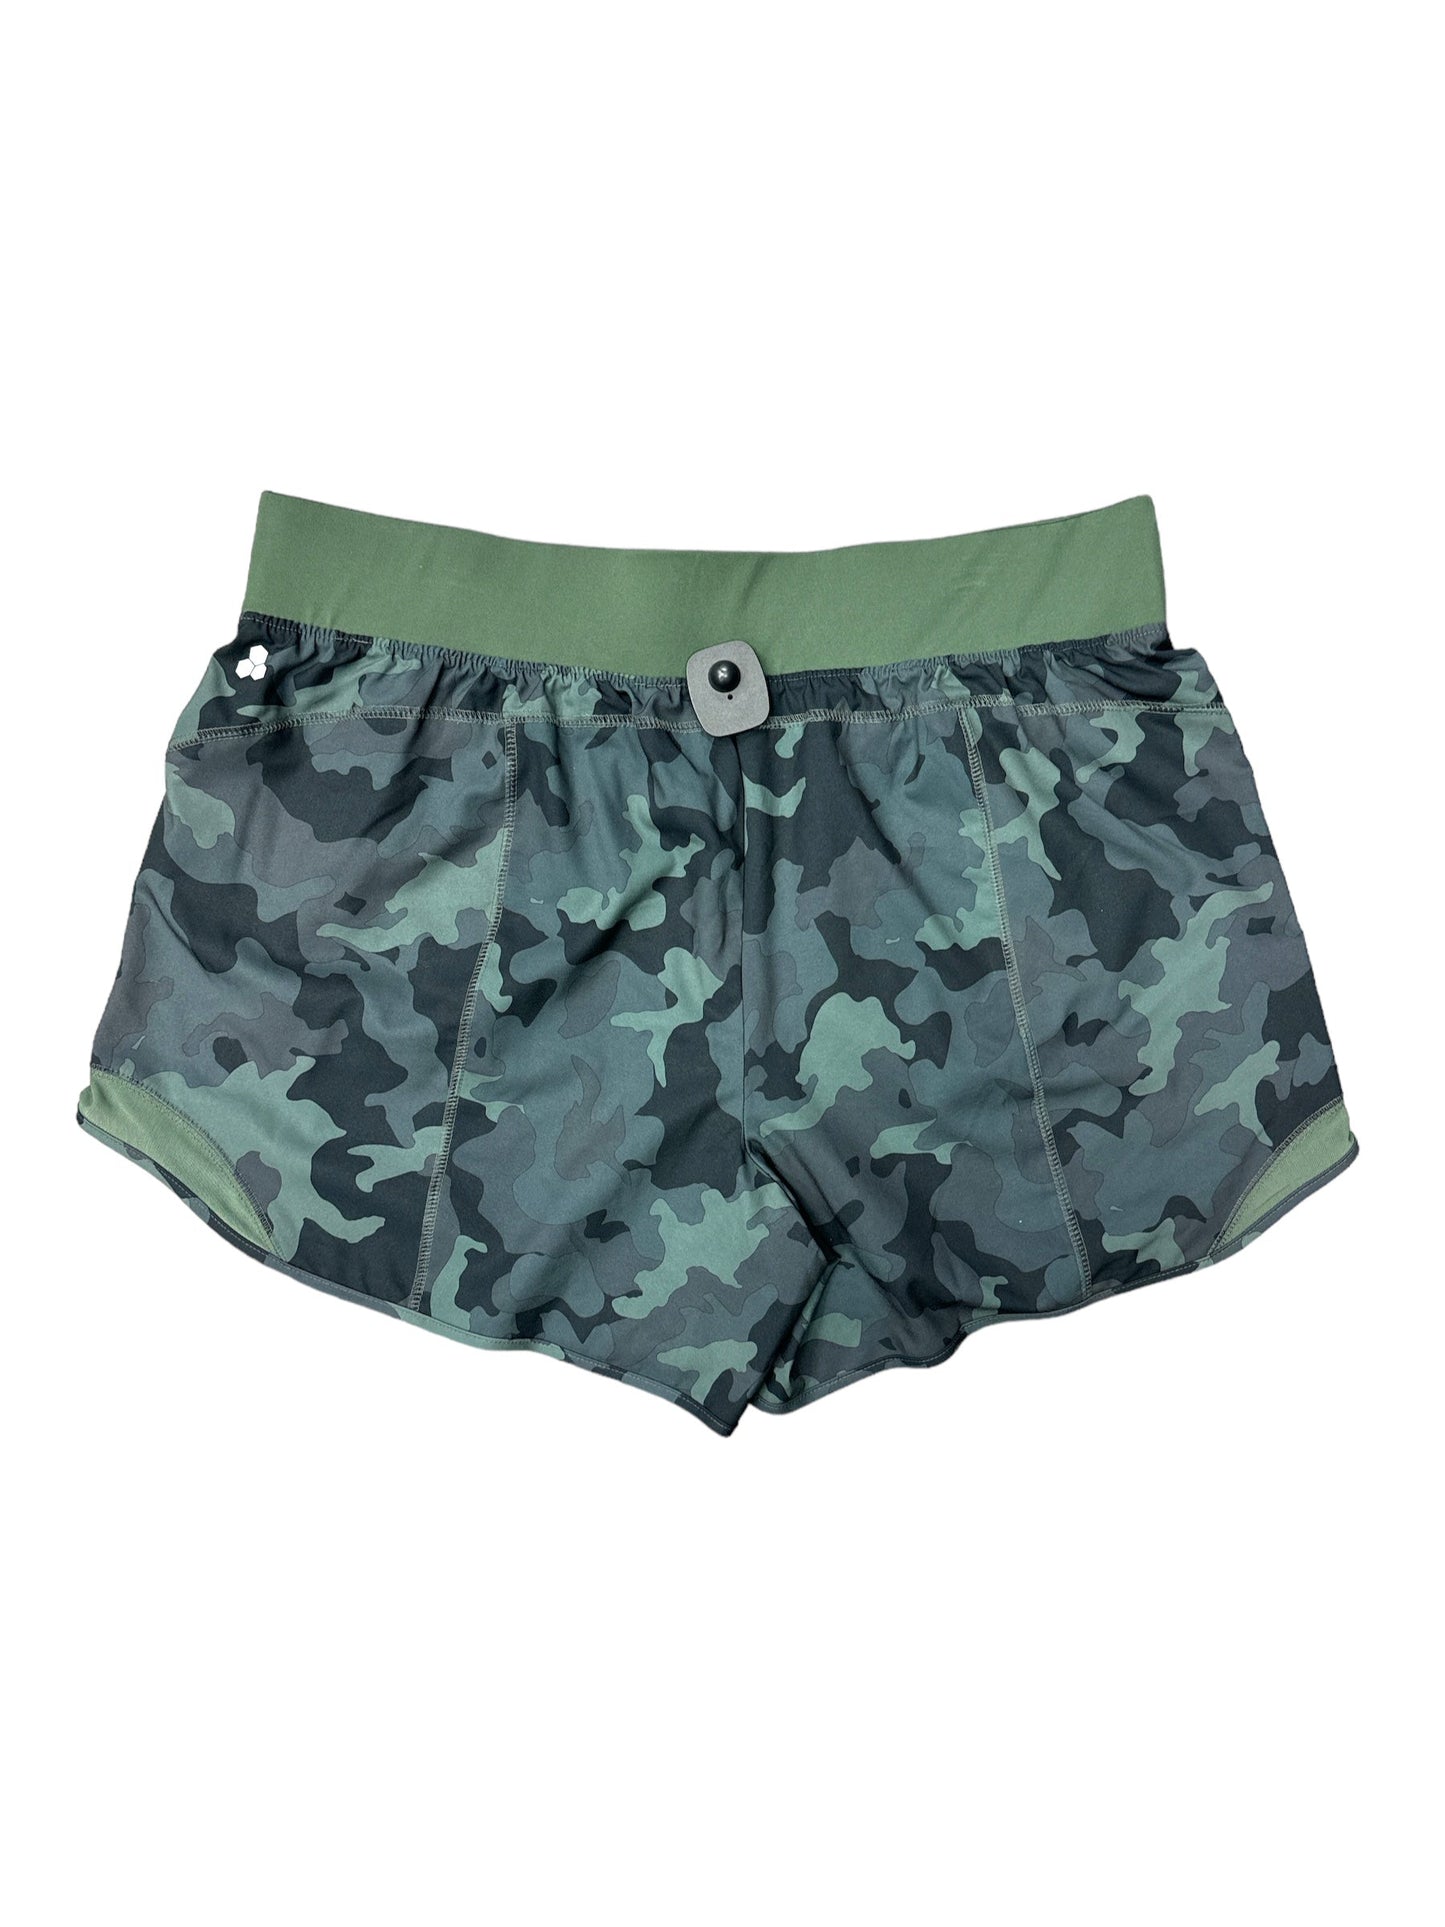 Camouflage Print Athletic Shorts Tek Gear, Size 2x